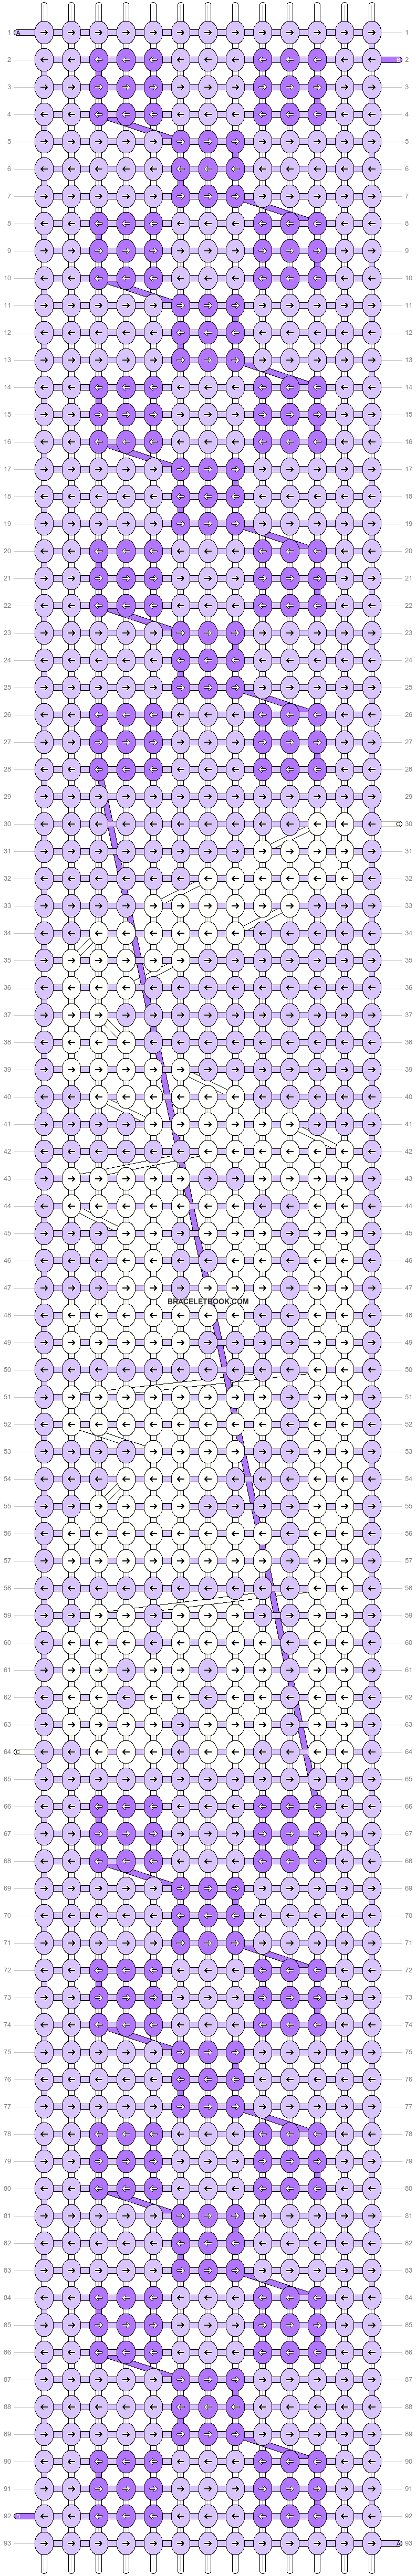 Alpha pattern #44004 variation #172236 pattern